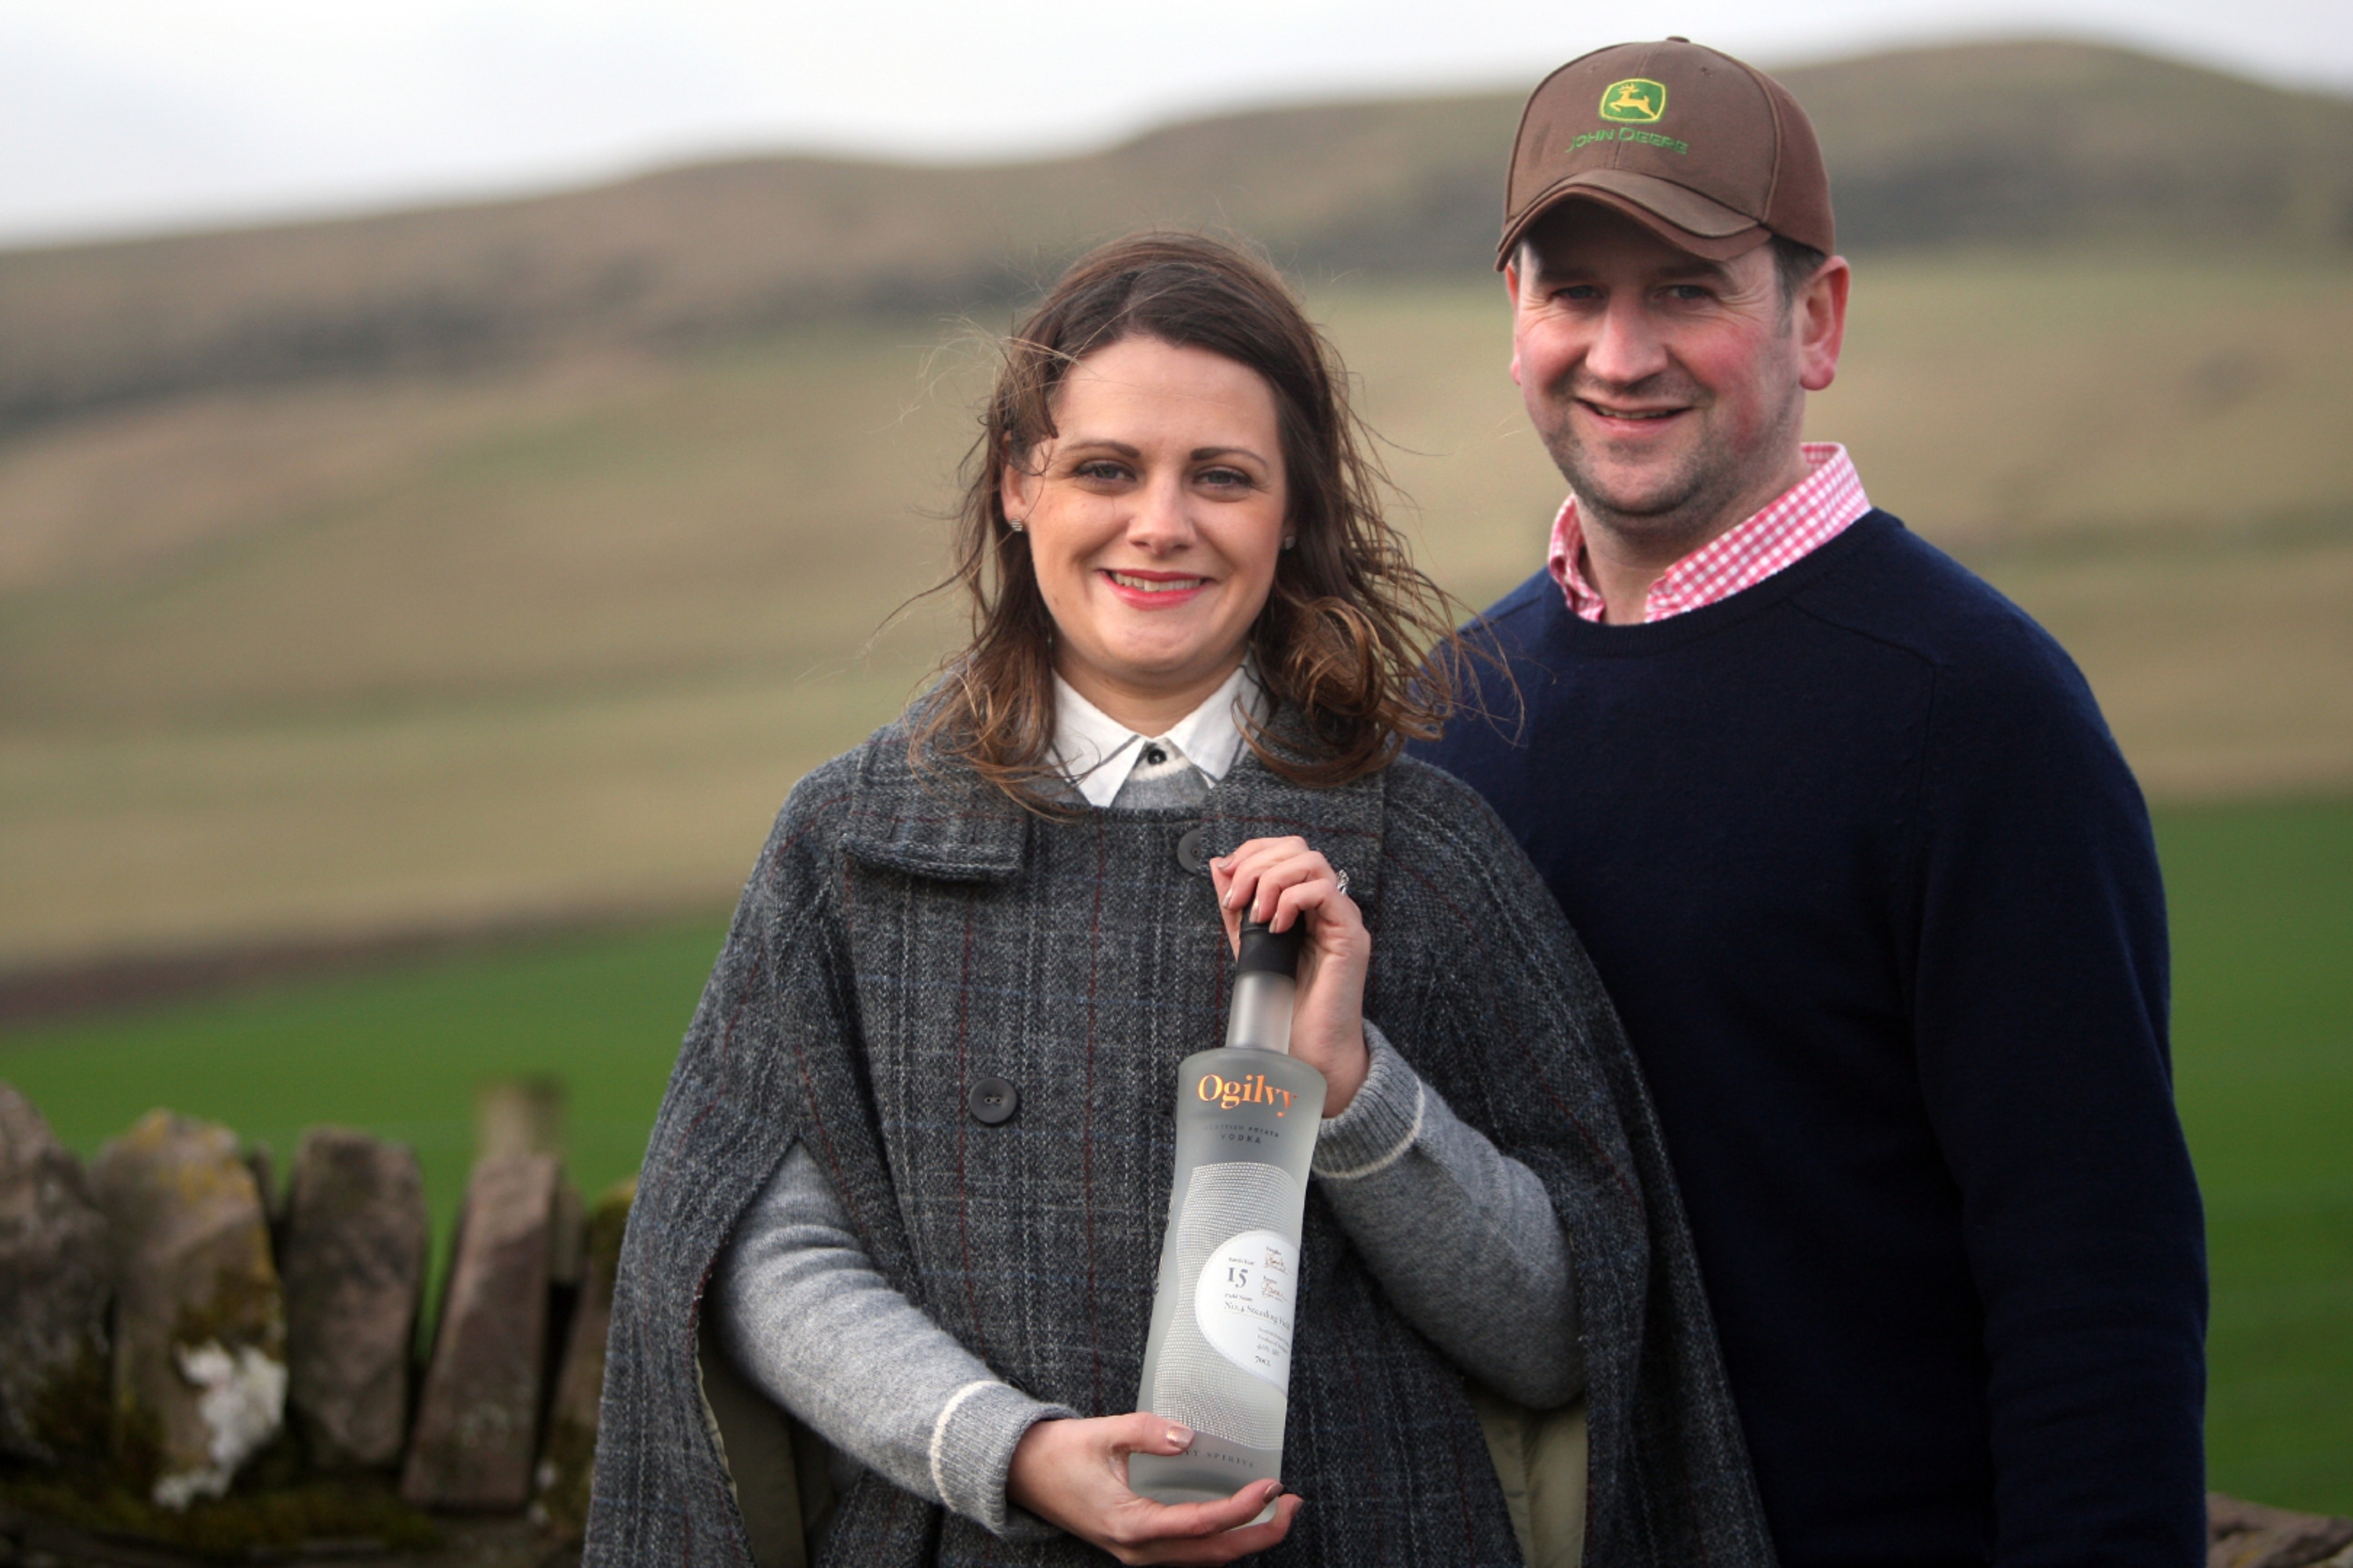 Caroline and Graeme Jarron with a bottle of Ogilvy Vodka at Hatton of Ogilvy farm near Glamis.